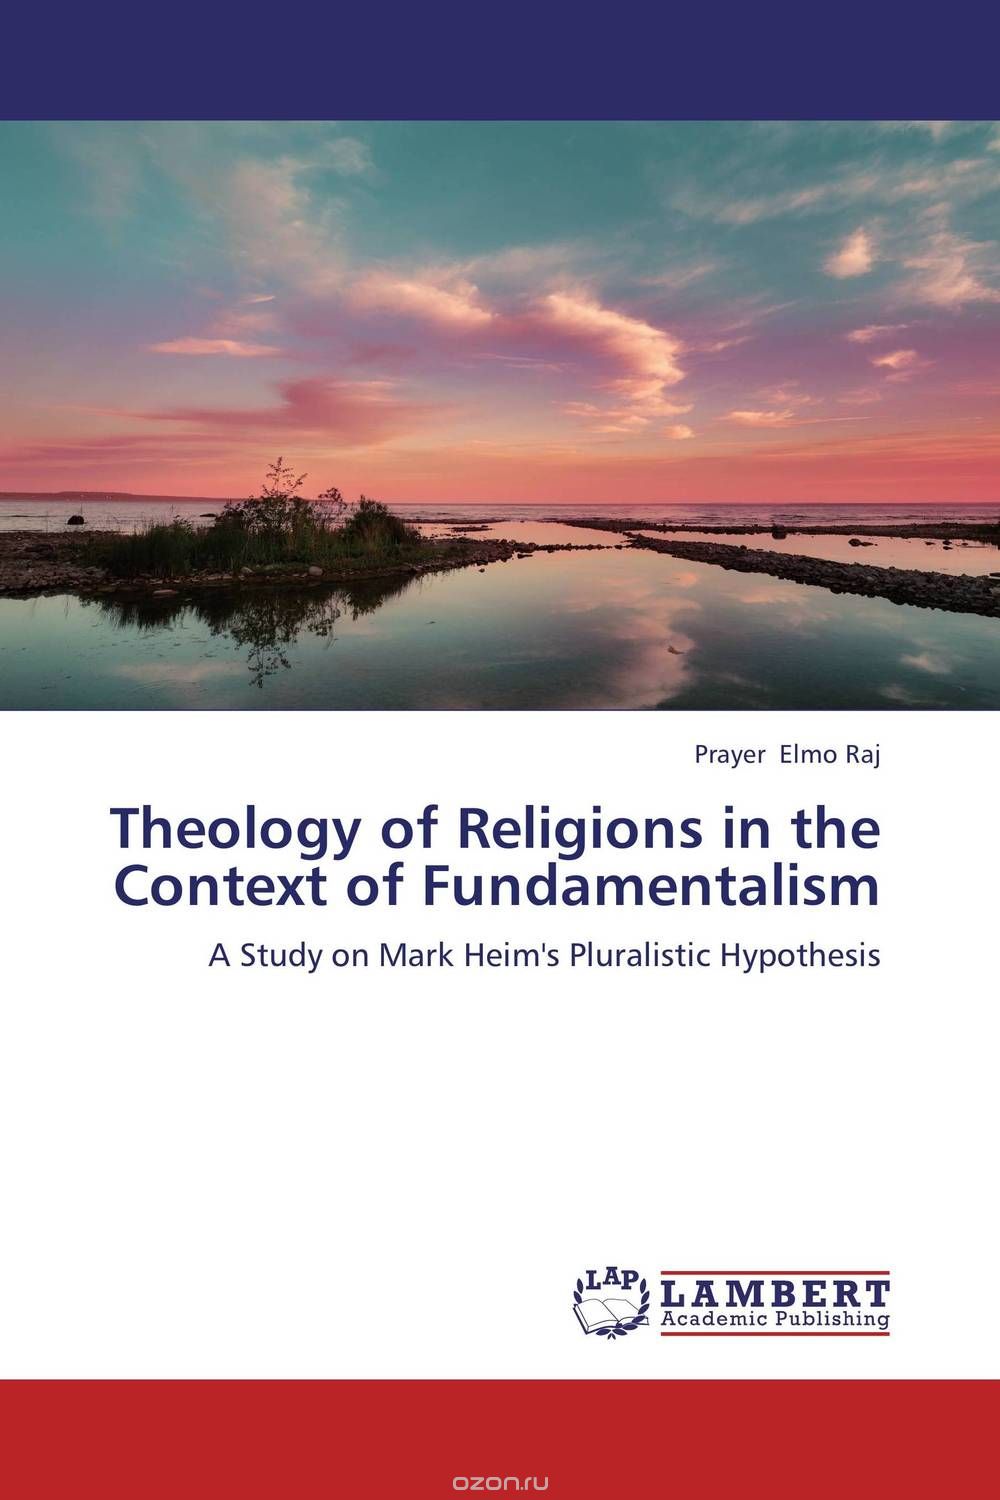 Скачать книгу "Theology of Religions in the Context of Fundamentalism"